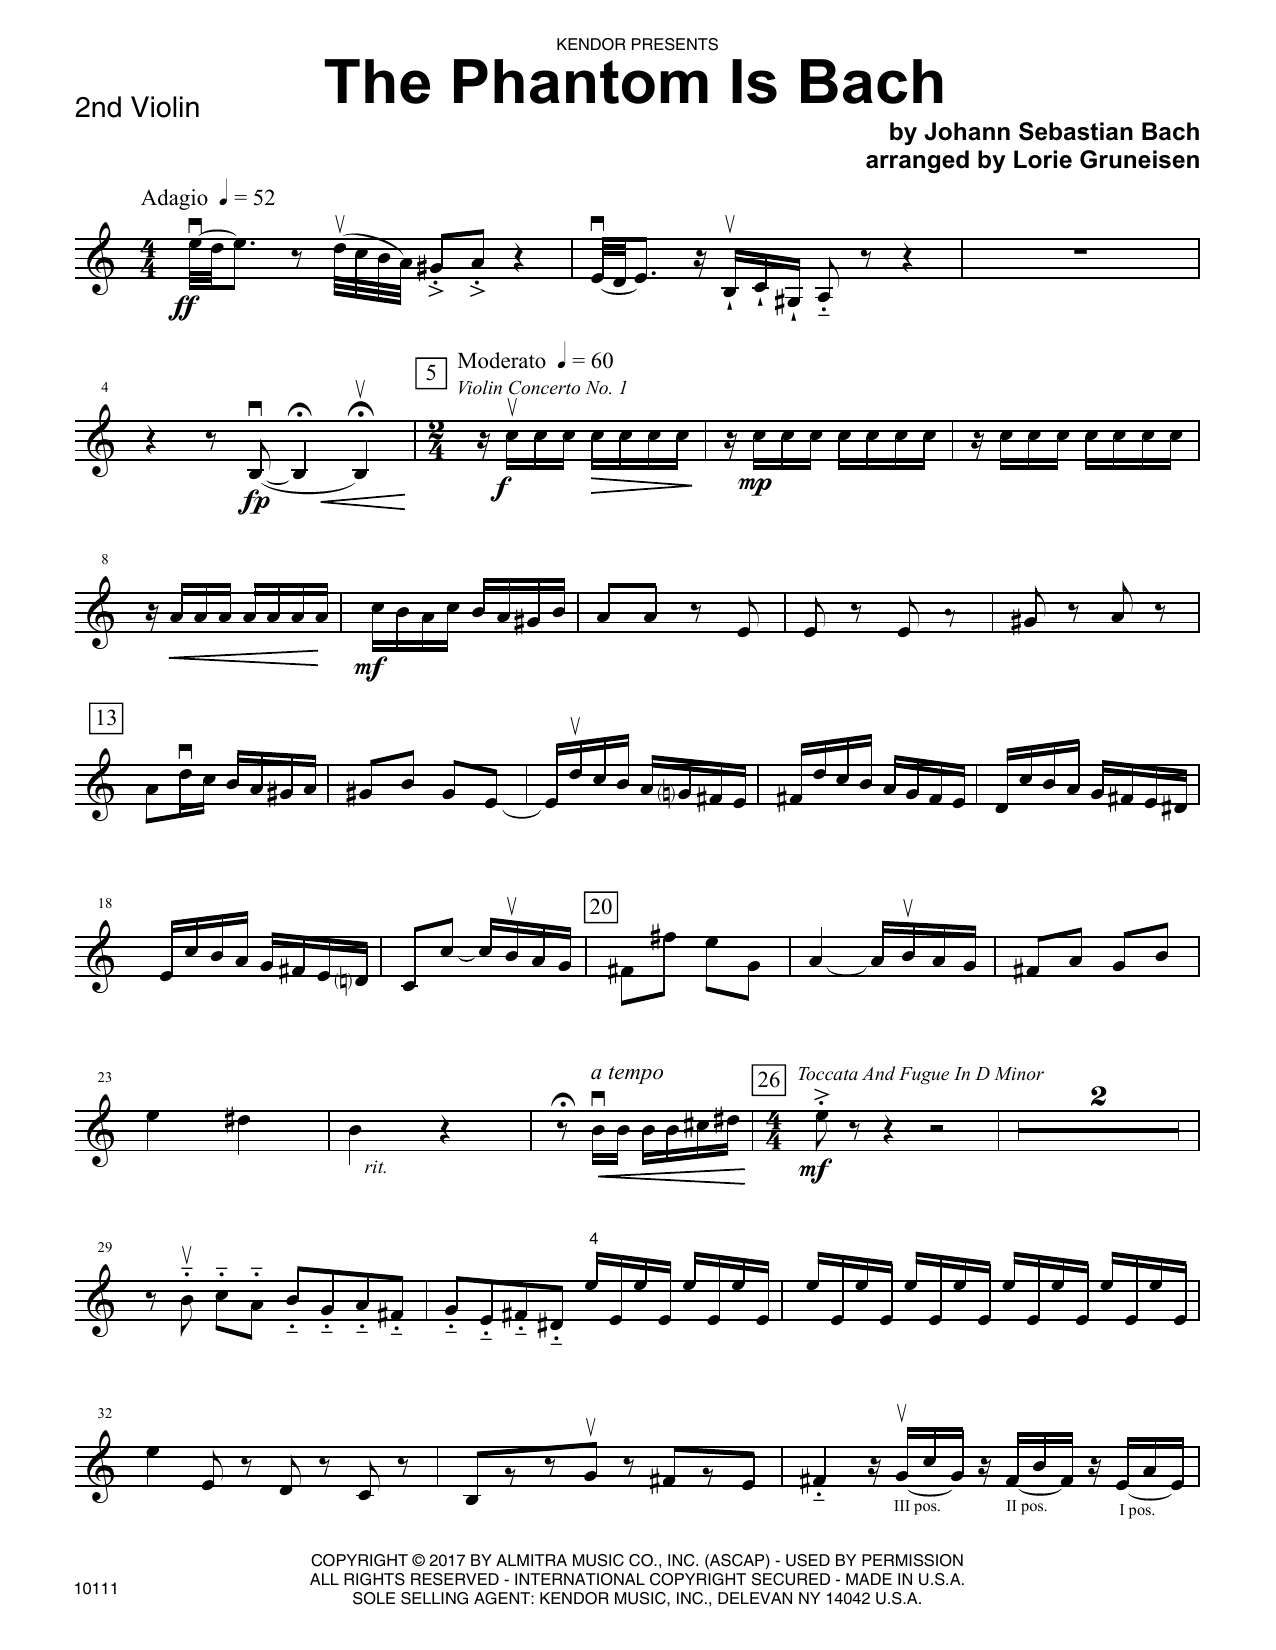 Download Lorie Gruneisen The Phantom Is Bach - 2nd Violin Sheet Music